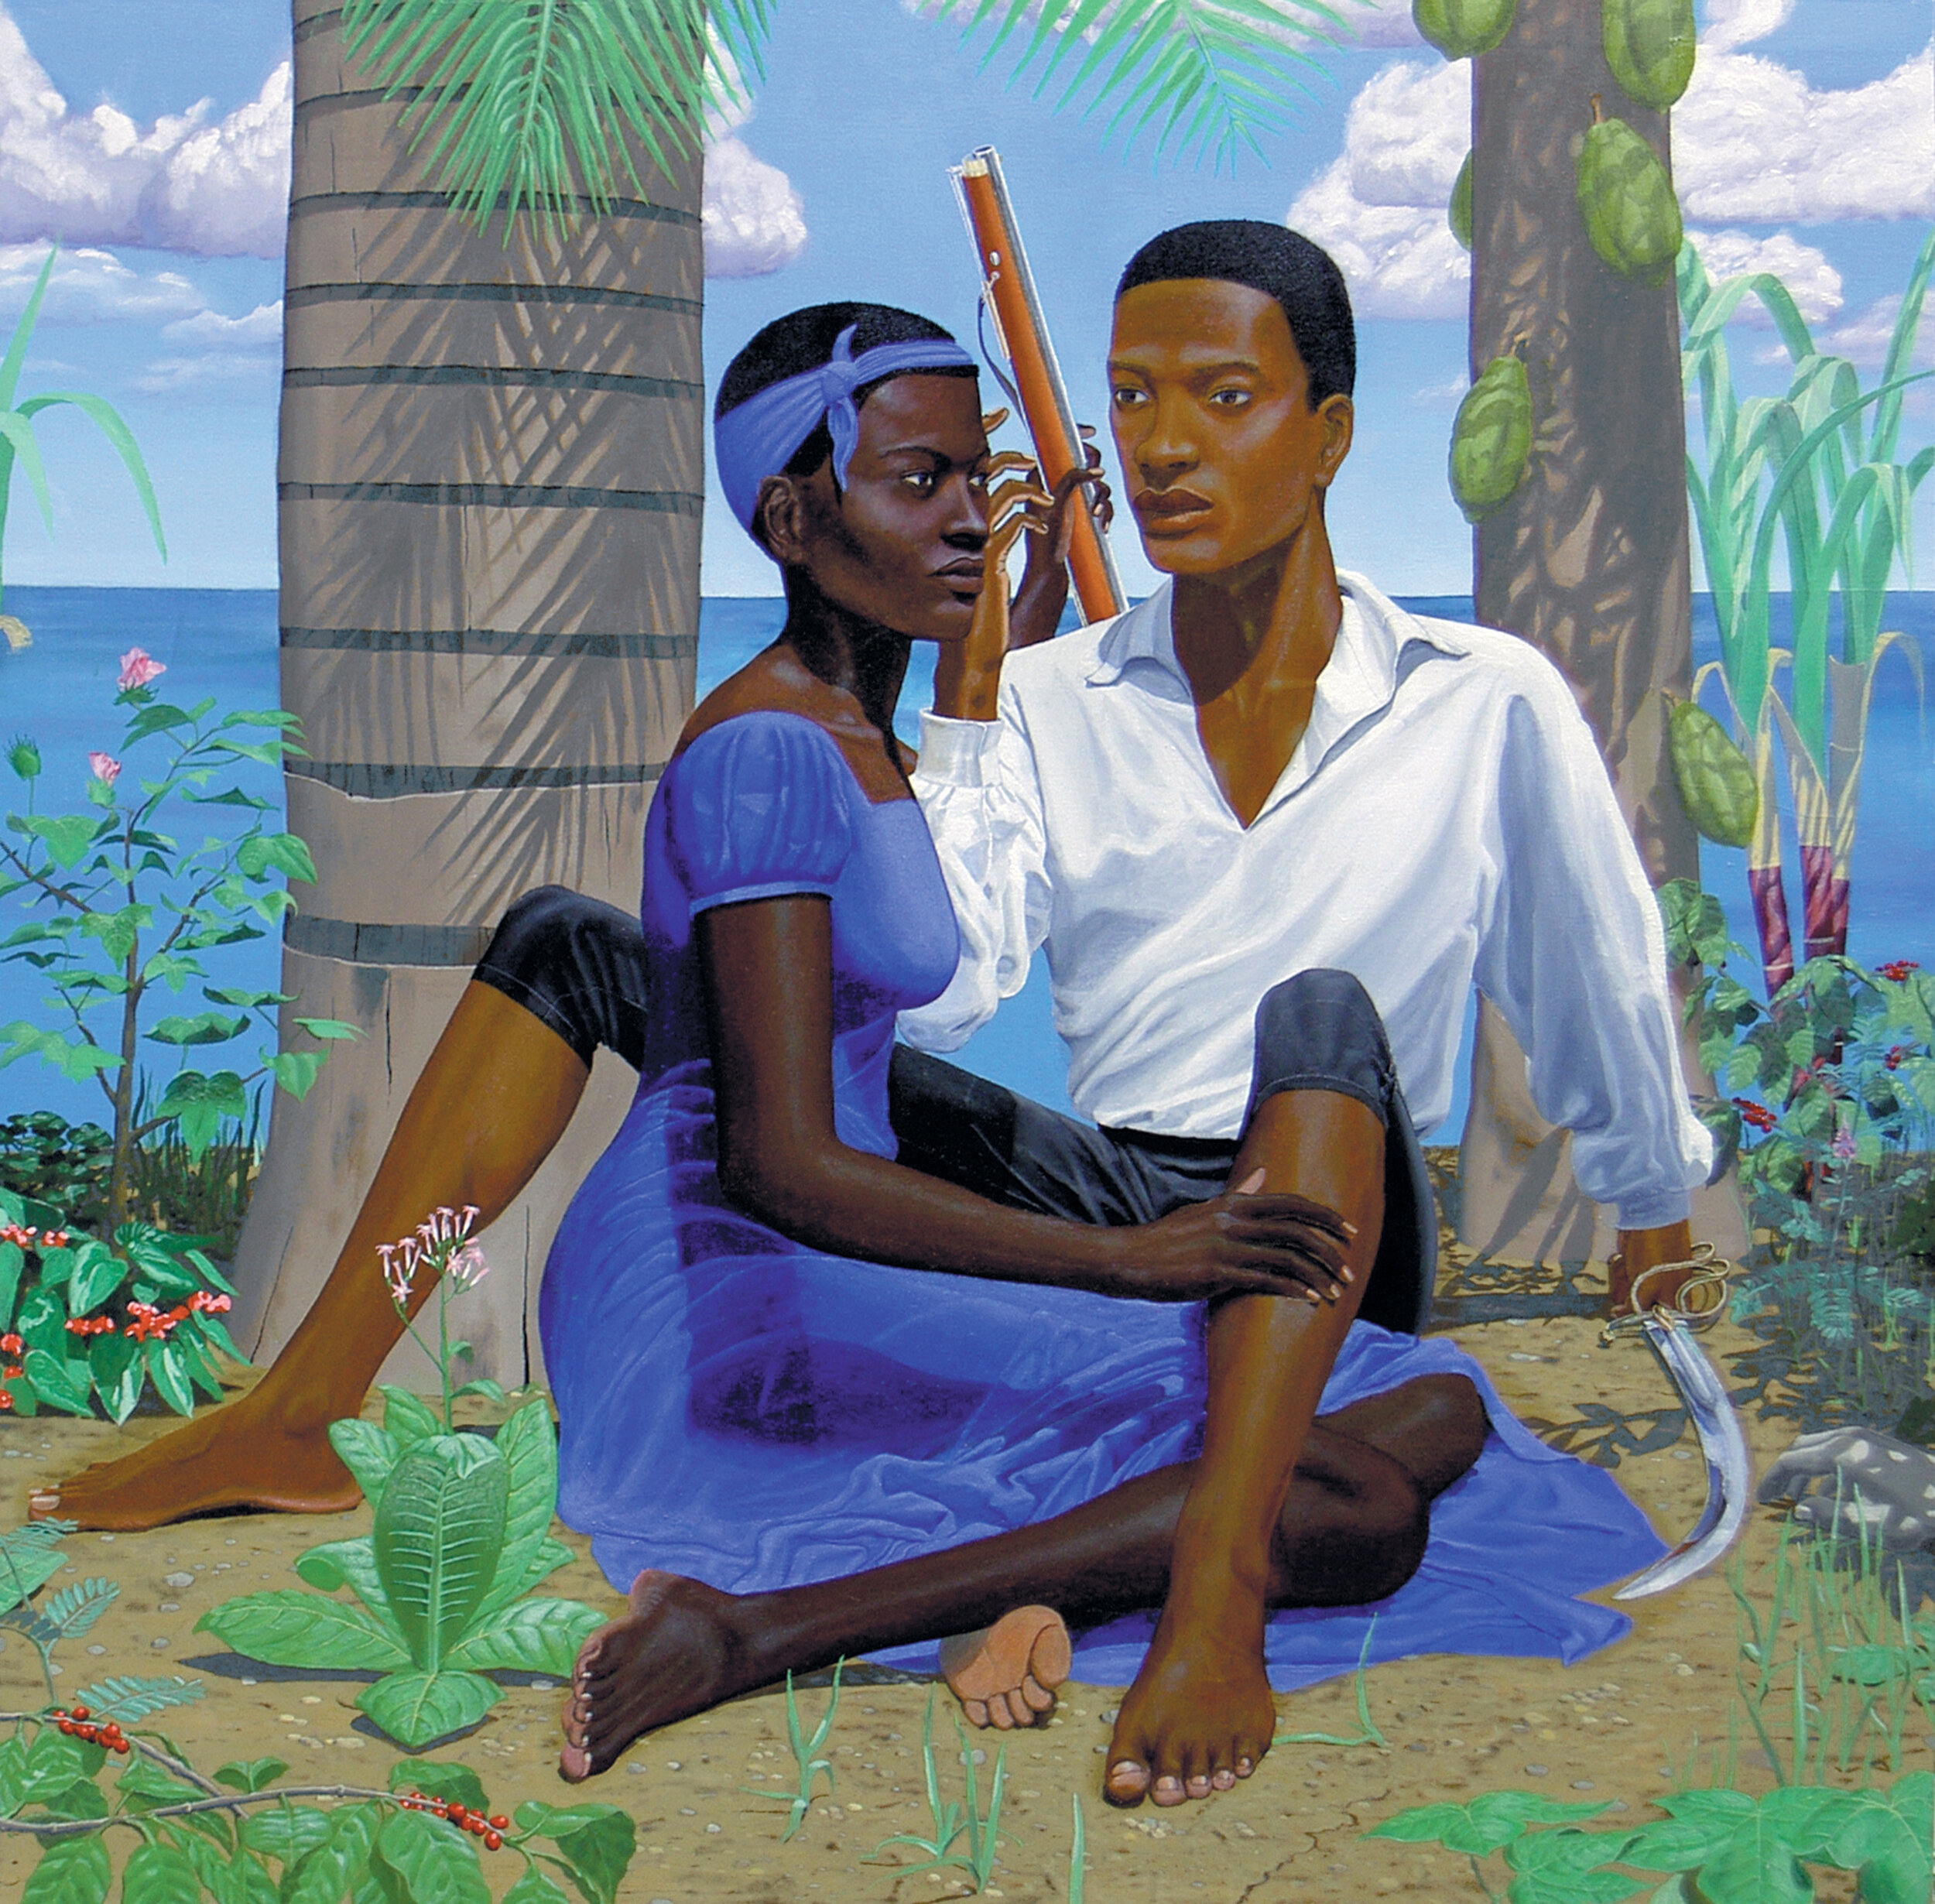 Kimathi Donkor, 'Charles and Sanite Belair' (2002). Oil on canvas, 13cm x 13cm. © Kimathi Donkor.